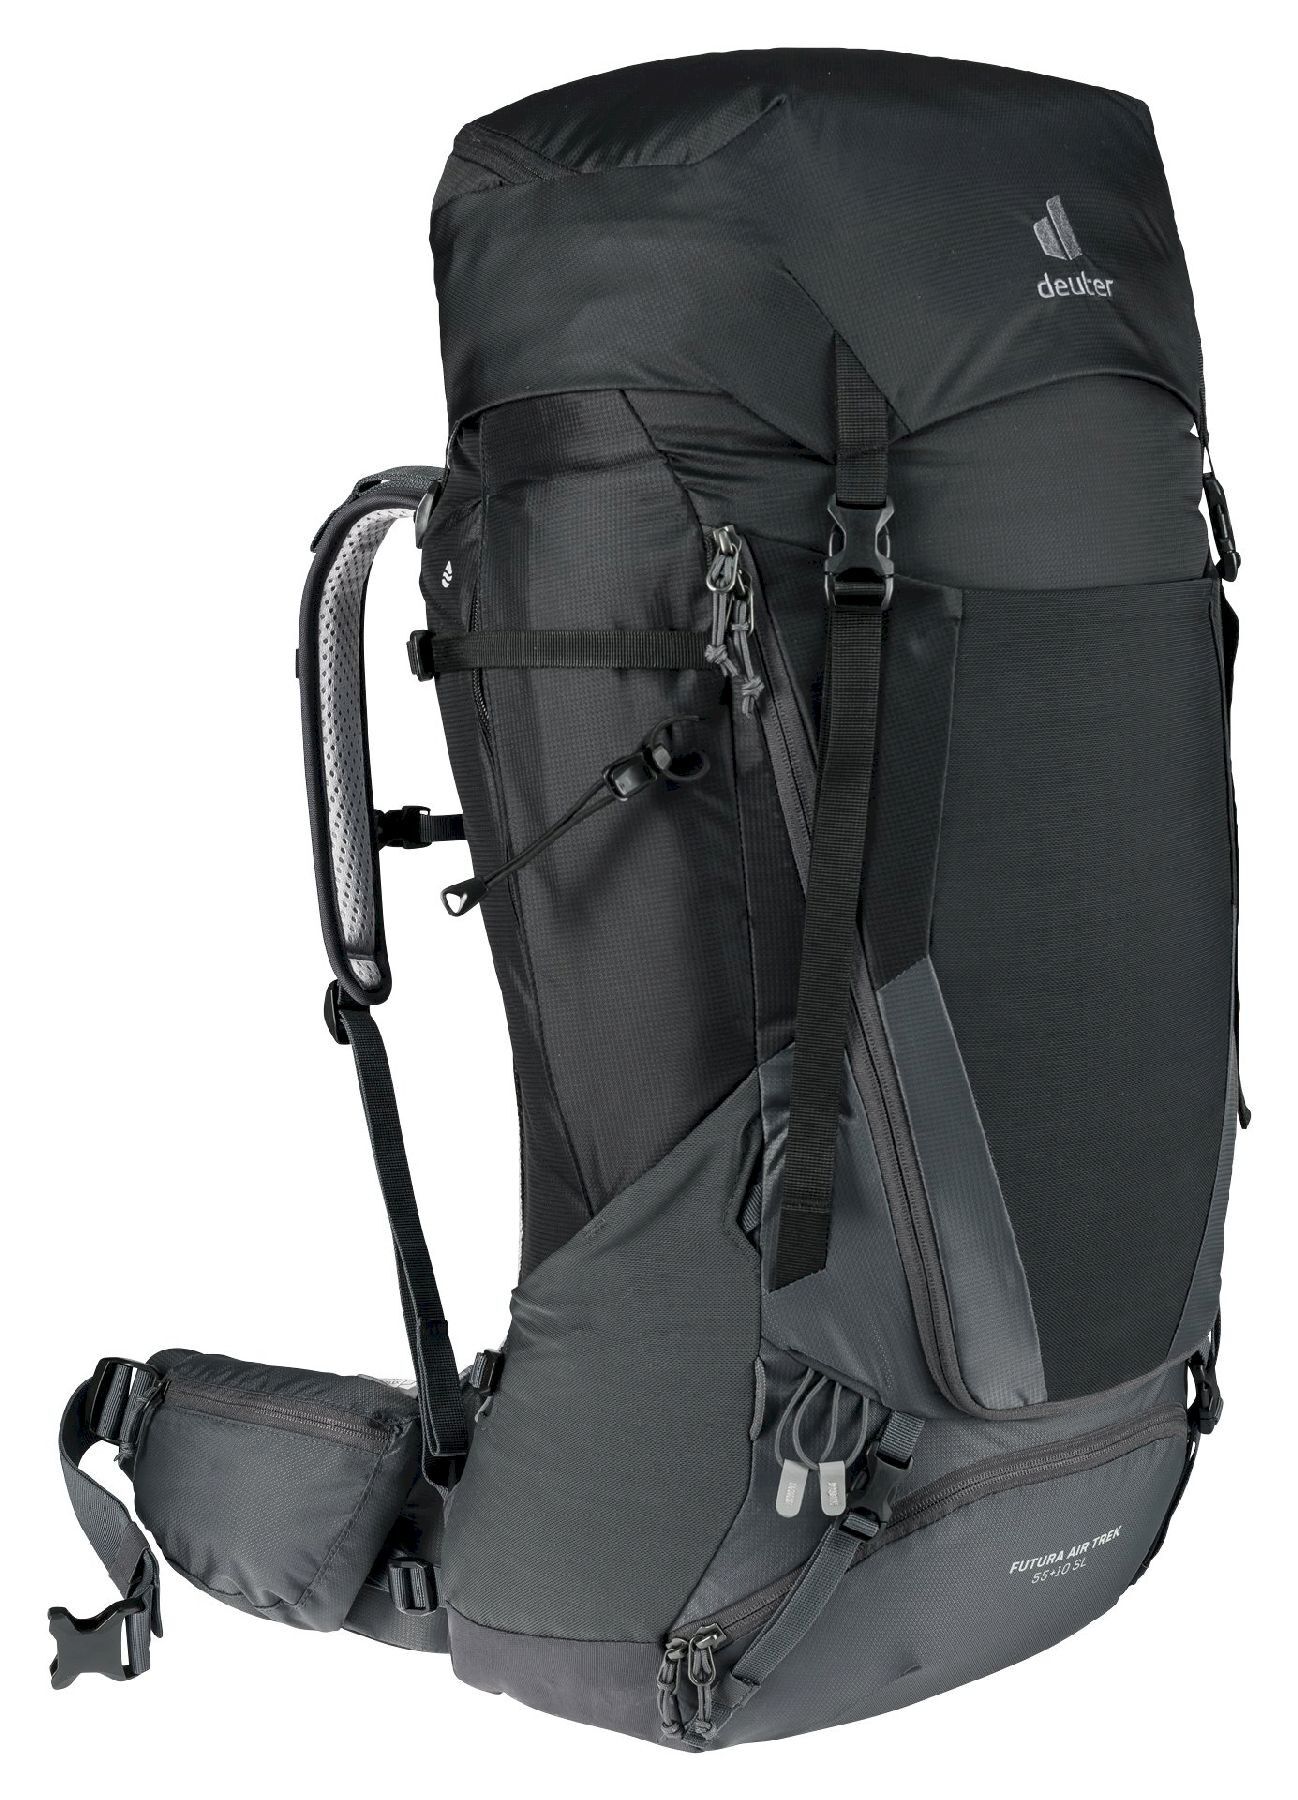 Deuter Futura Air Trek 55 + 10 SL - Hiking backpack - Women's